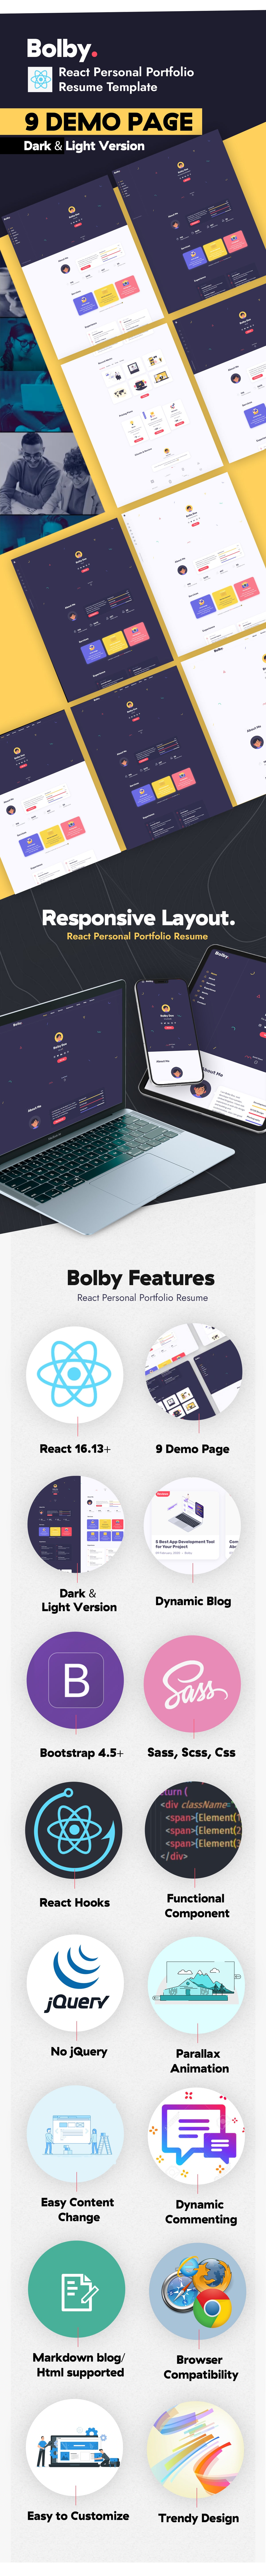 Bolby - React Personal Portfolio CV/Resume Template - 2